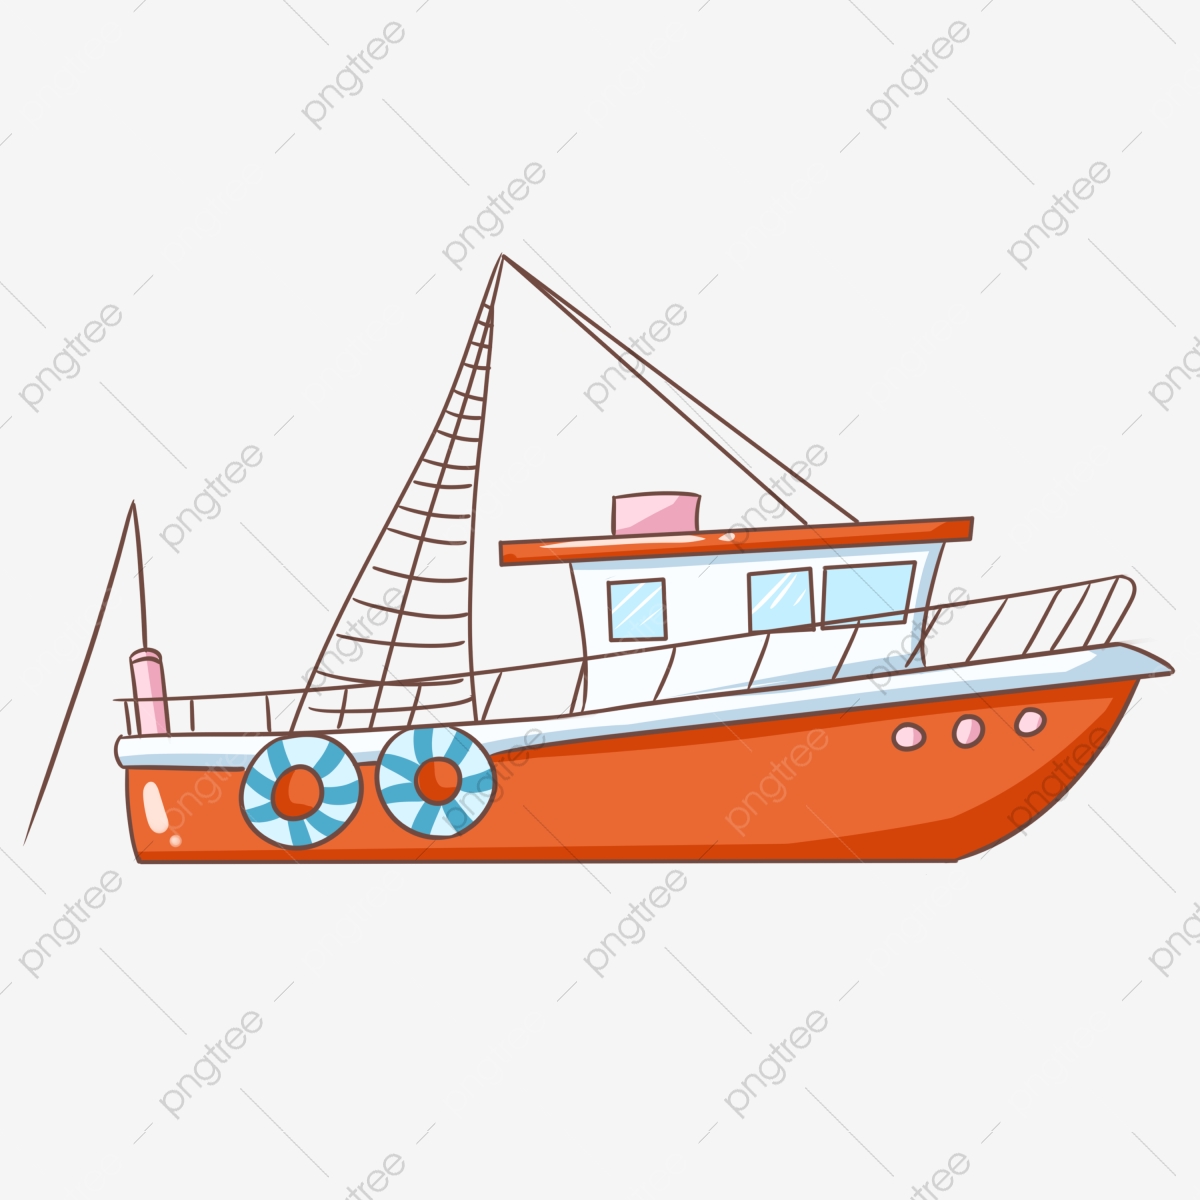 cruise clipart orange boat